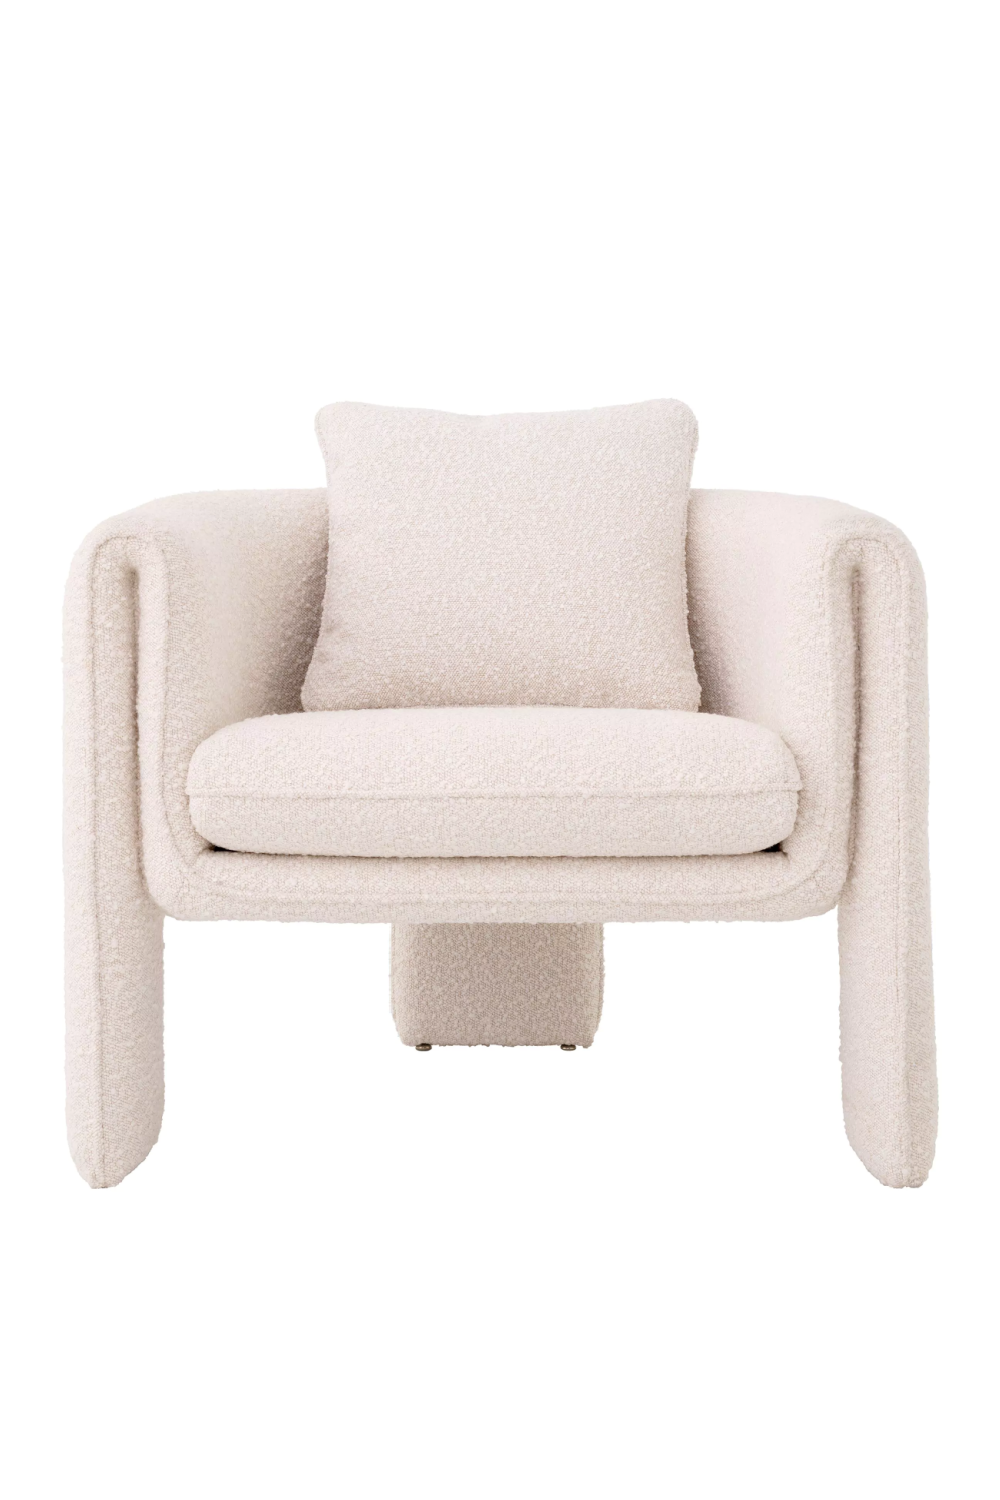 Cream Bouclé Modern Accent Chair | Eichholtz Toto | Oroa.com